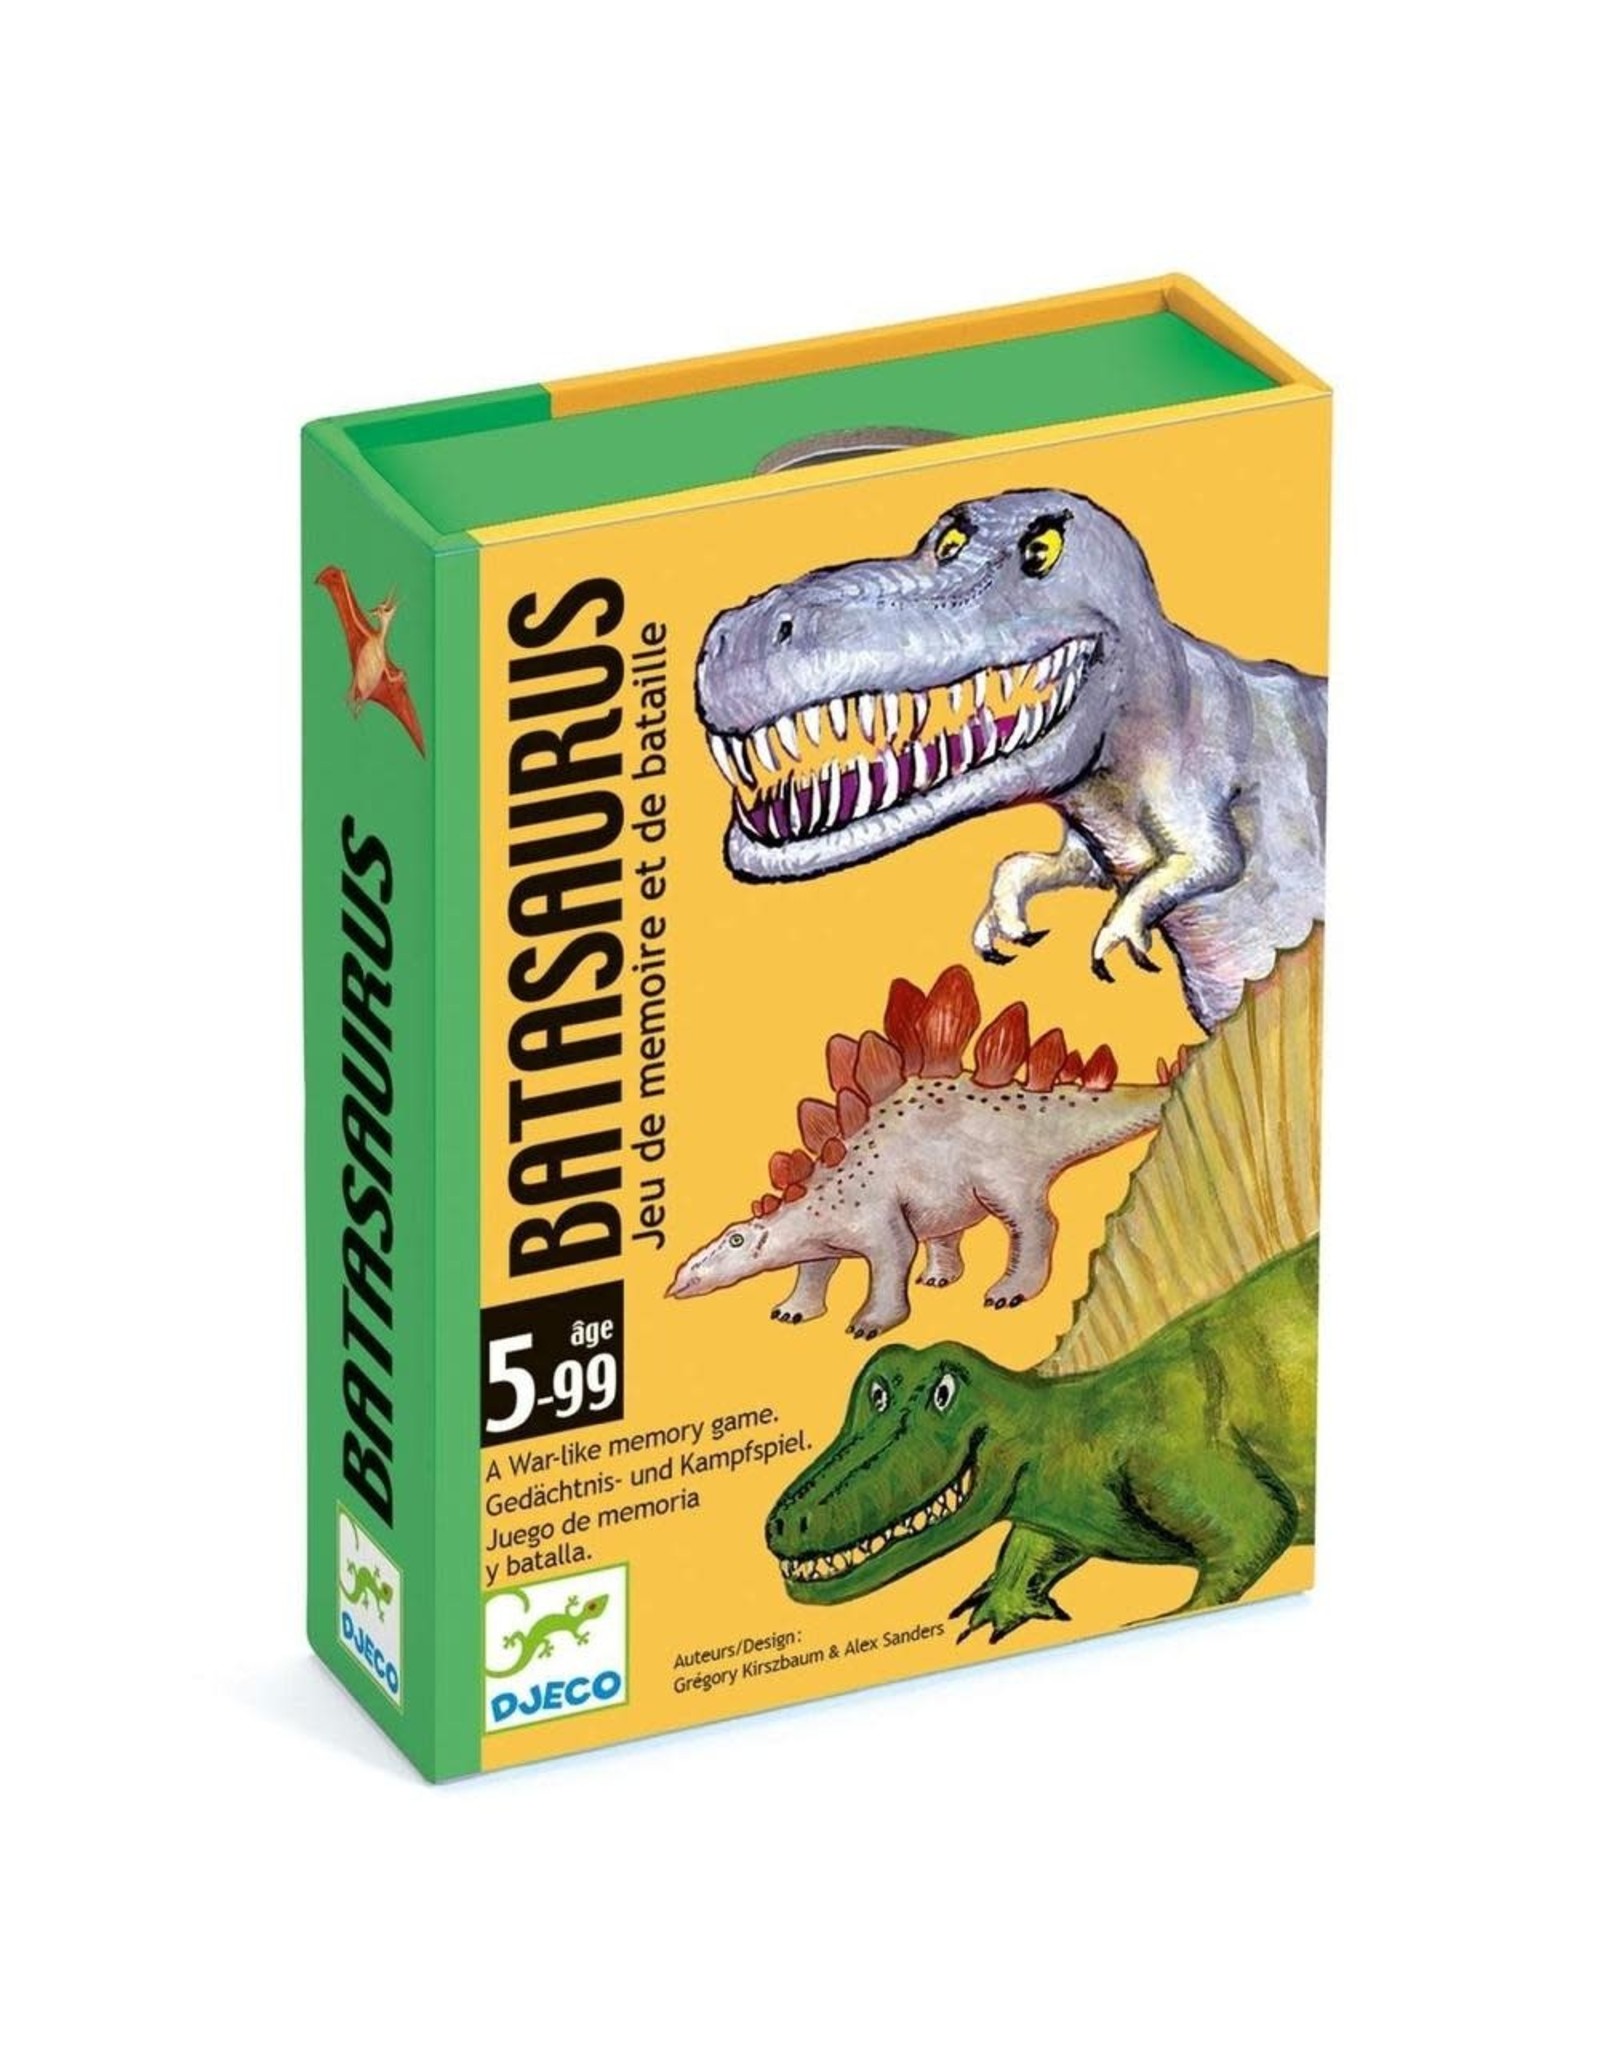 Djeco Batasaurus